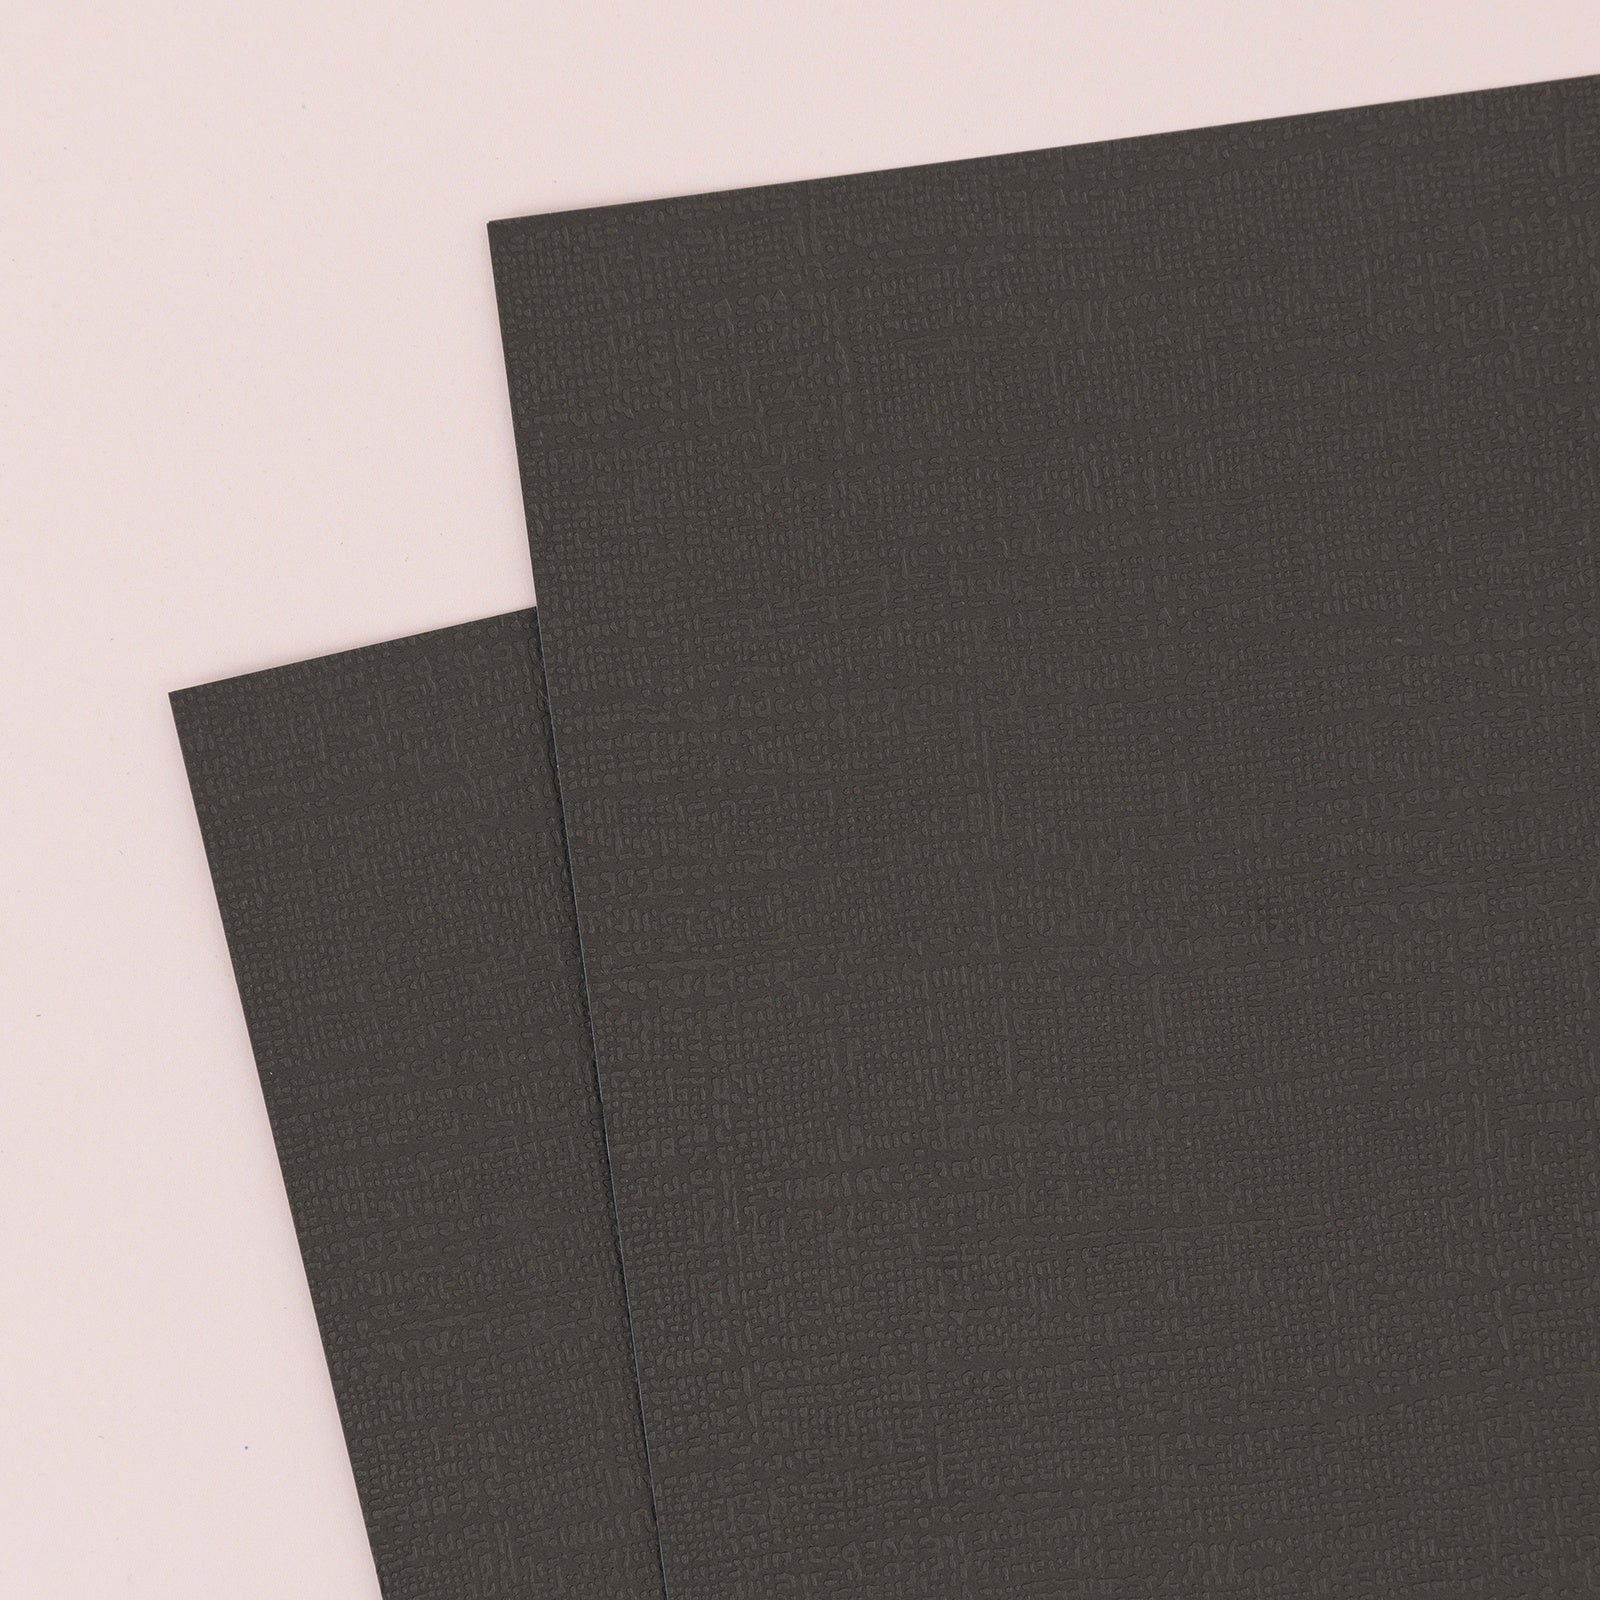 DCWV® Jewel Textured Cardstock Paper Pad, 4.5 x 6.5